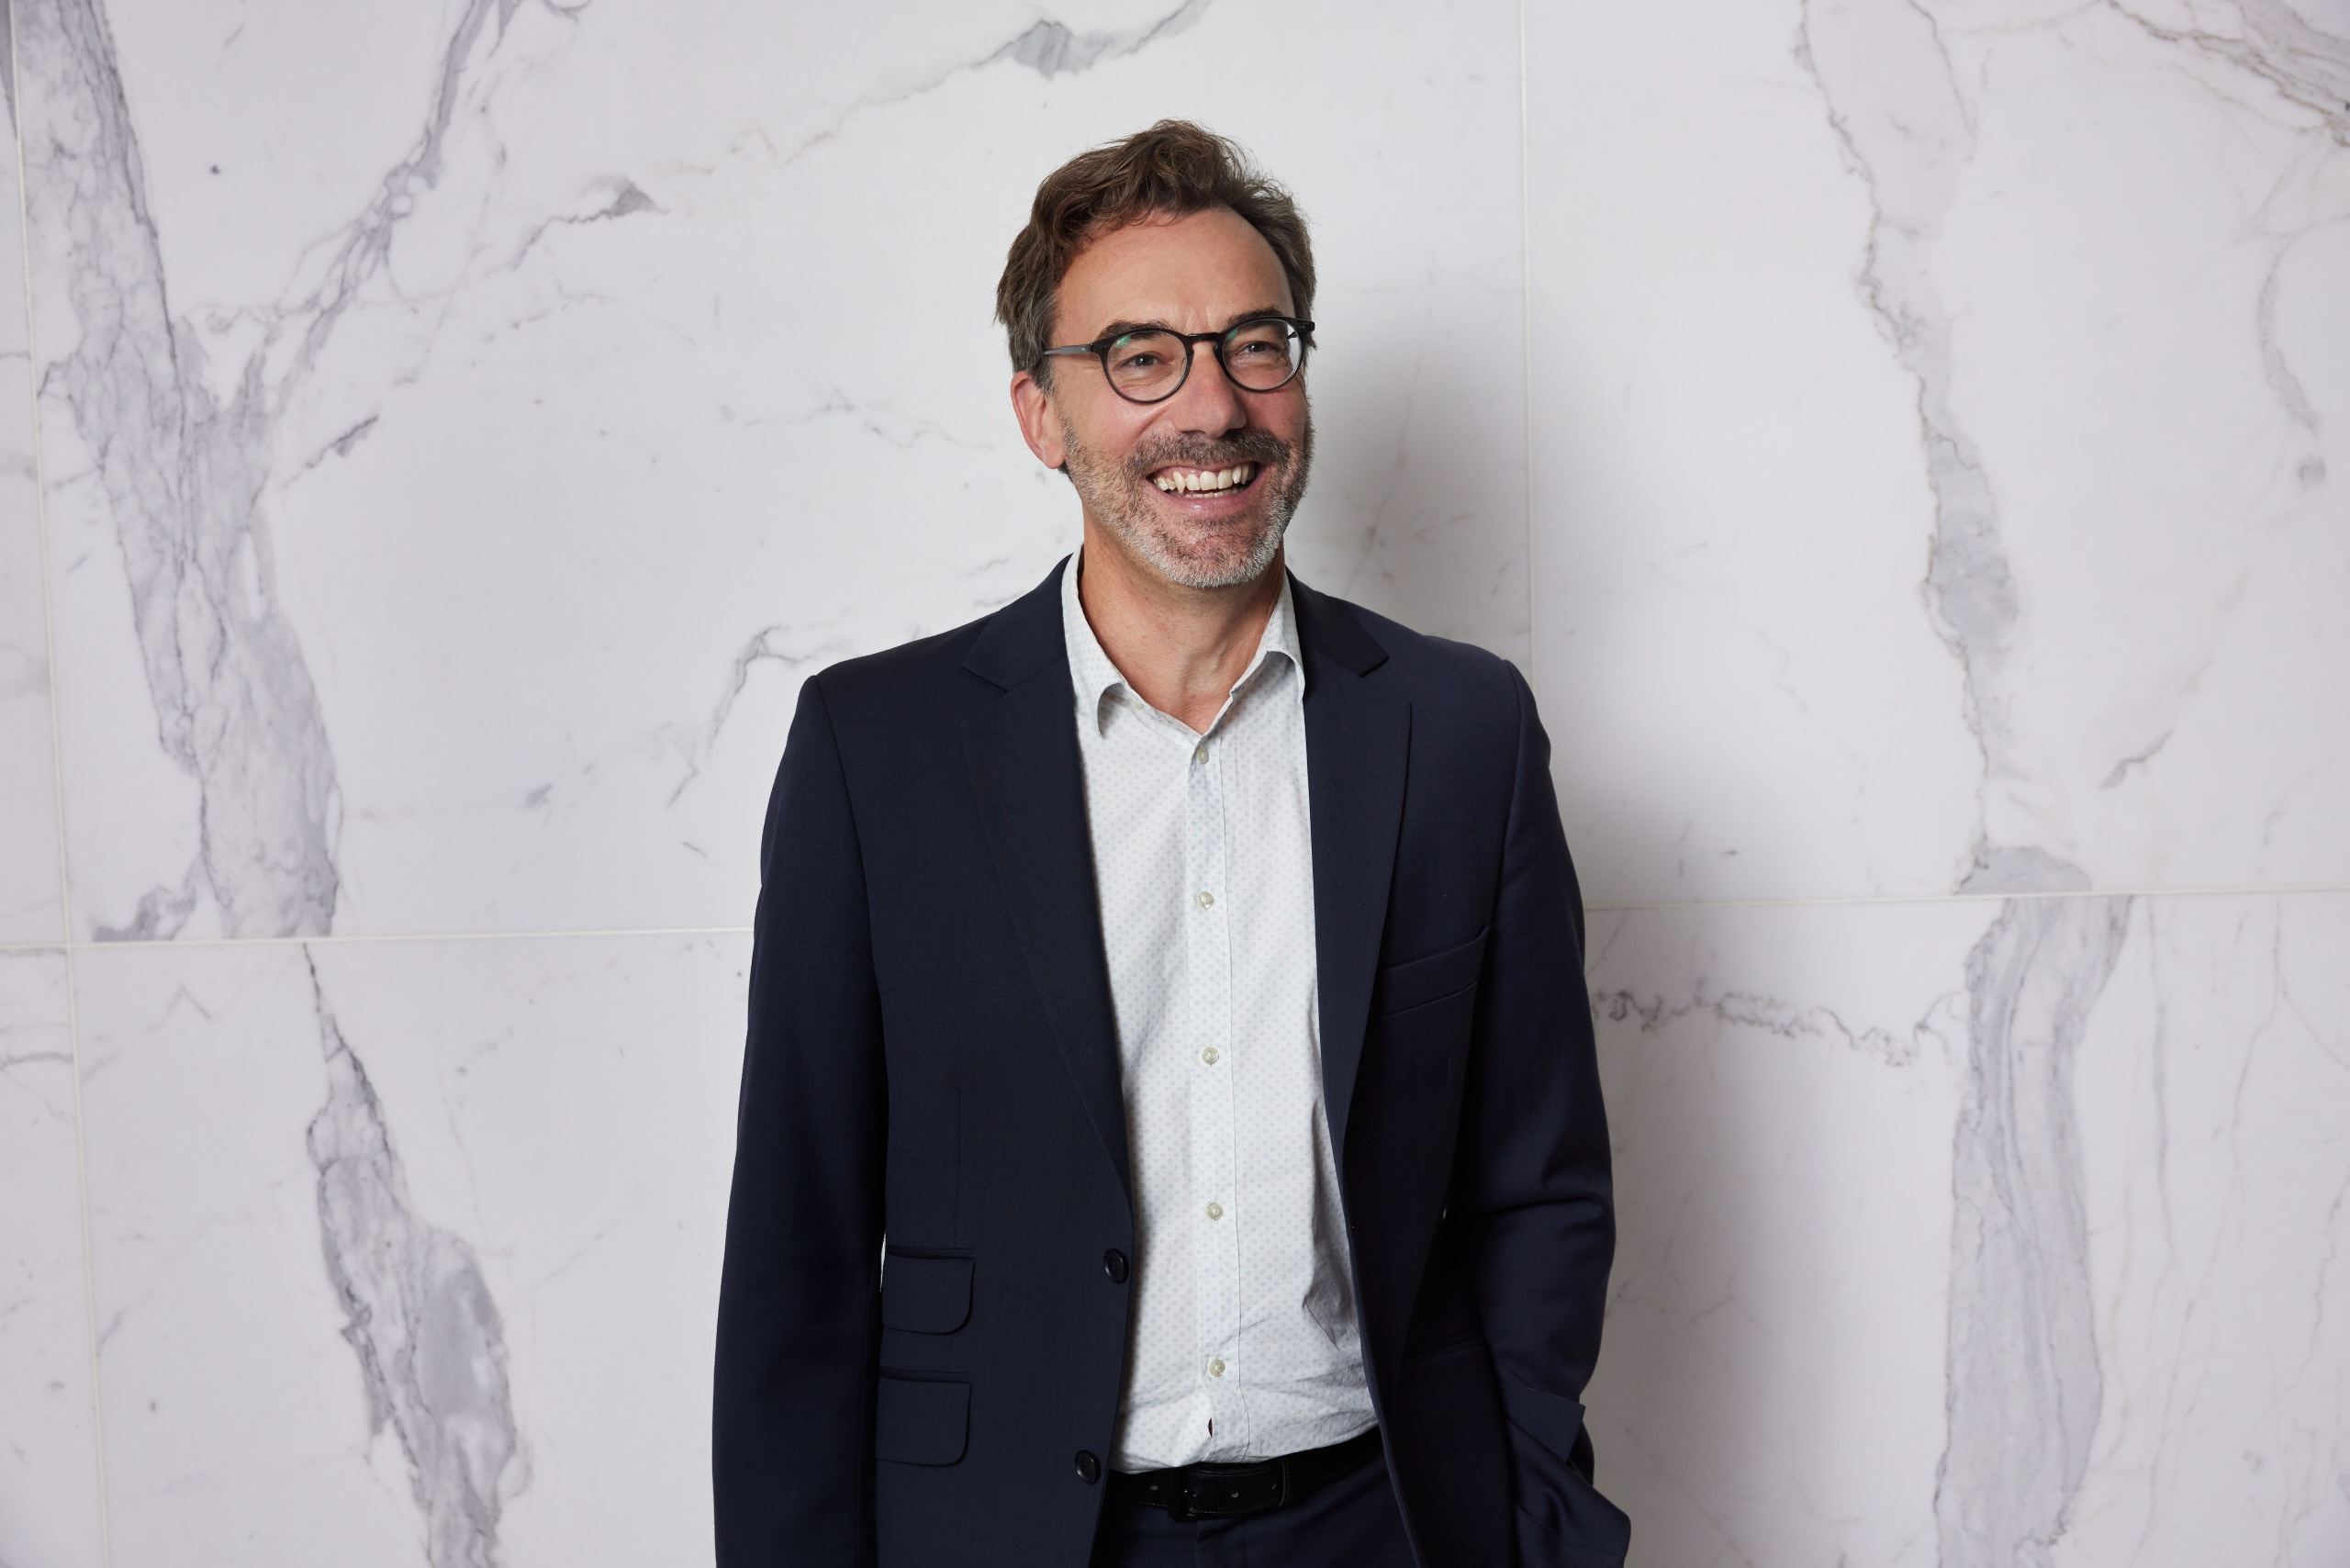 Meet Pathzero’s new Chief Sustainability Officer, Christophe Brulliard